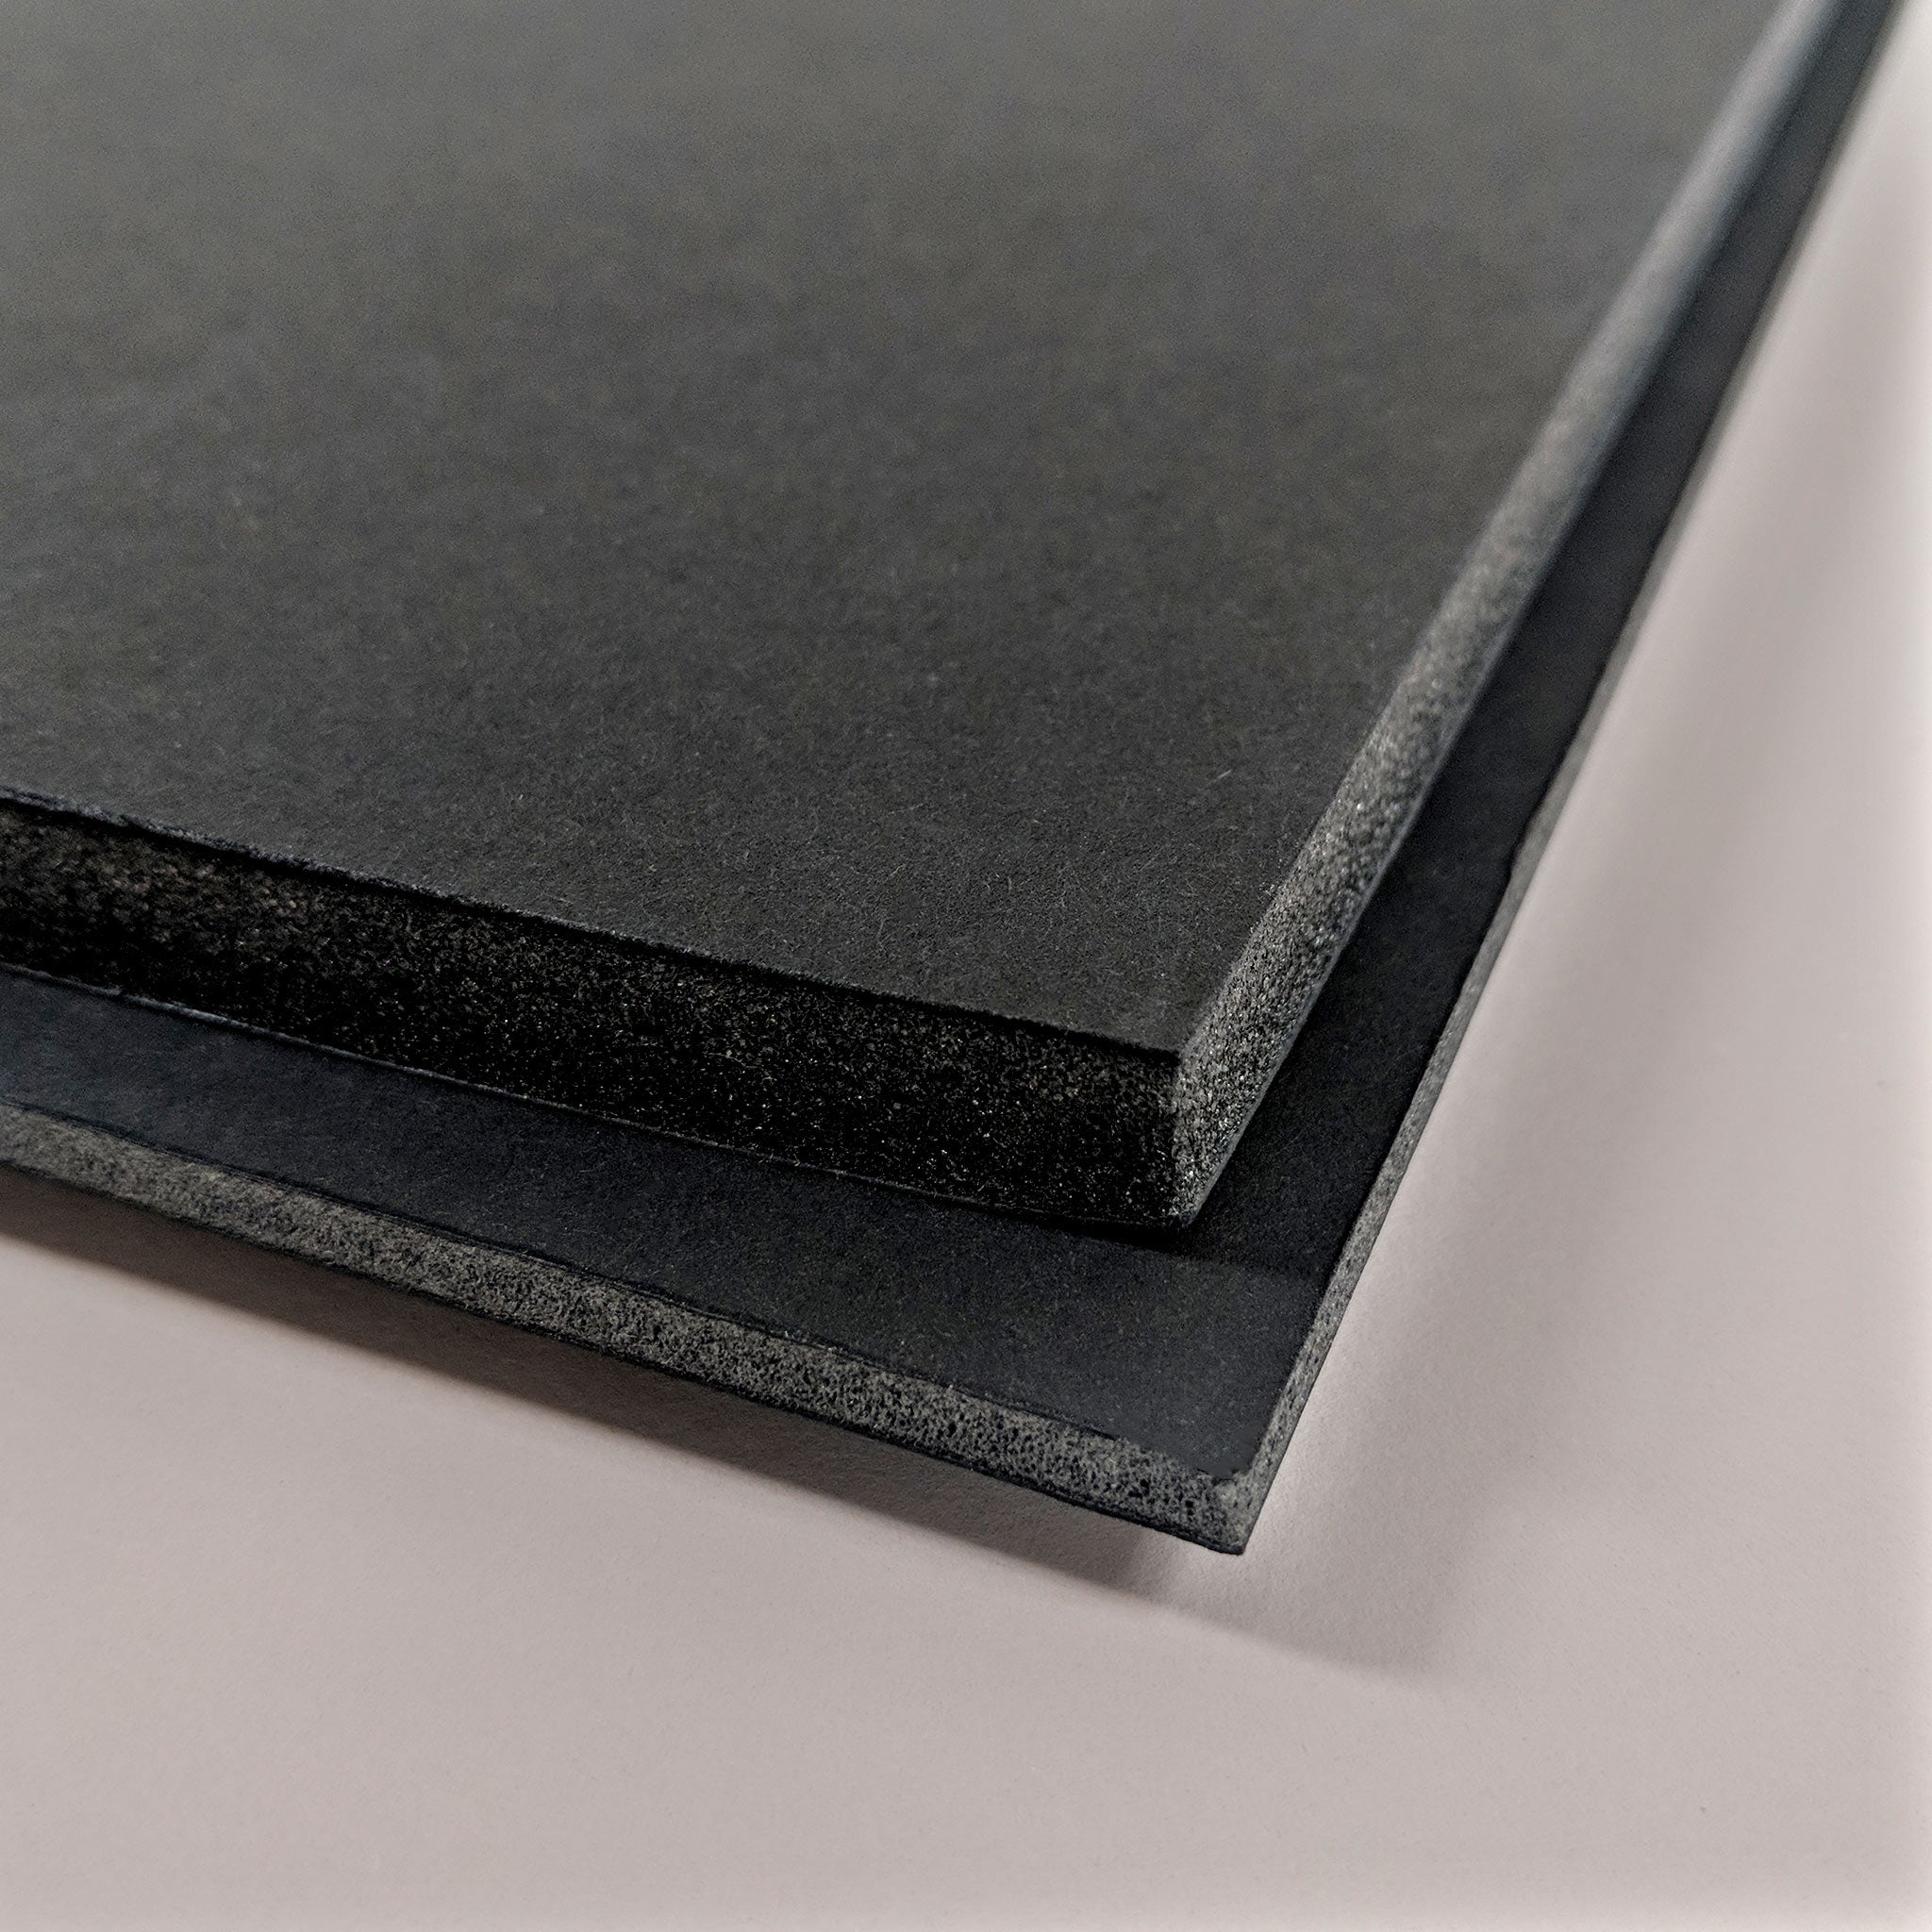  Foam Board - Black 3/16 Thick 24x36 (10 sheets